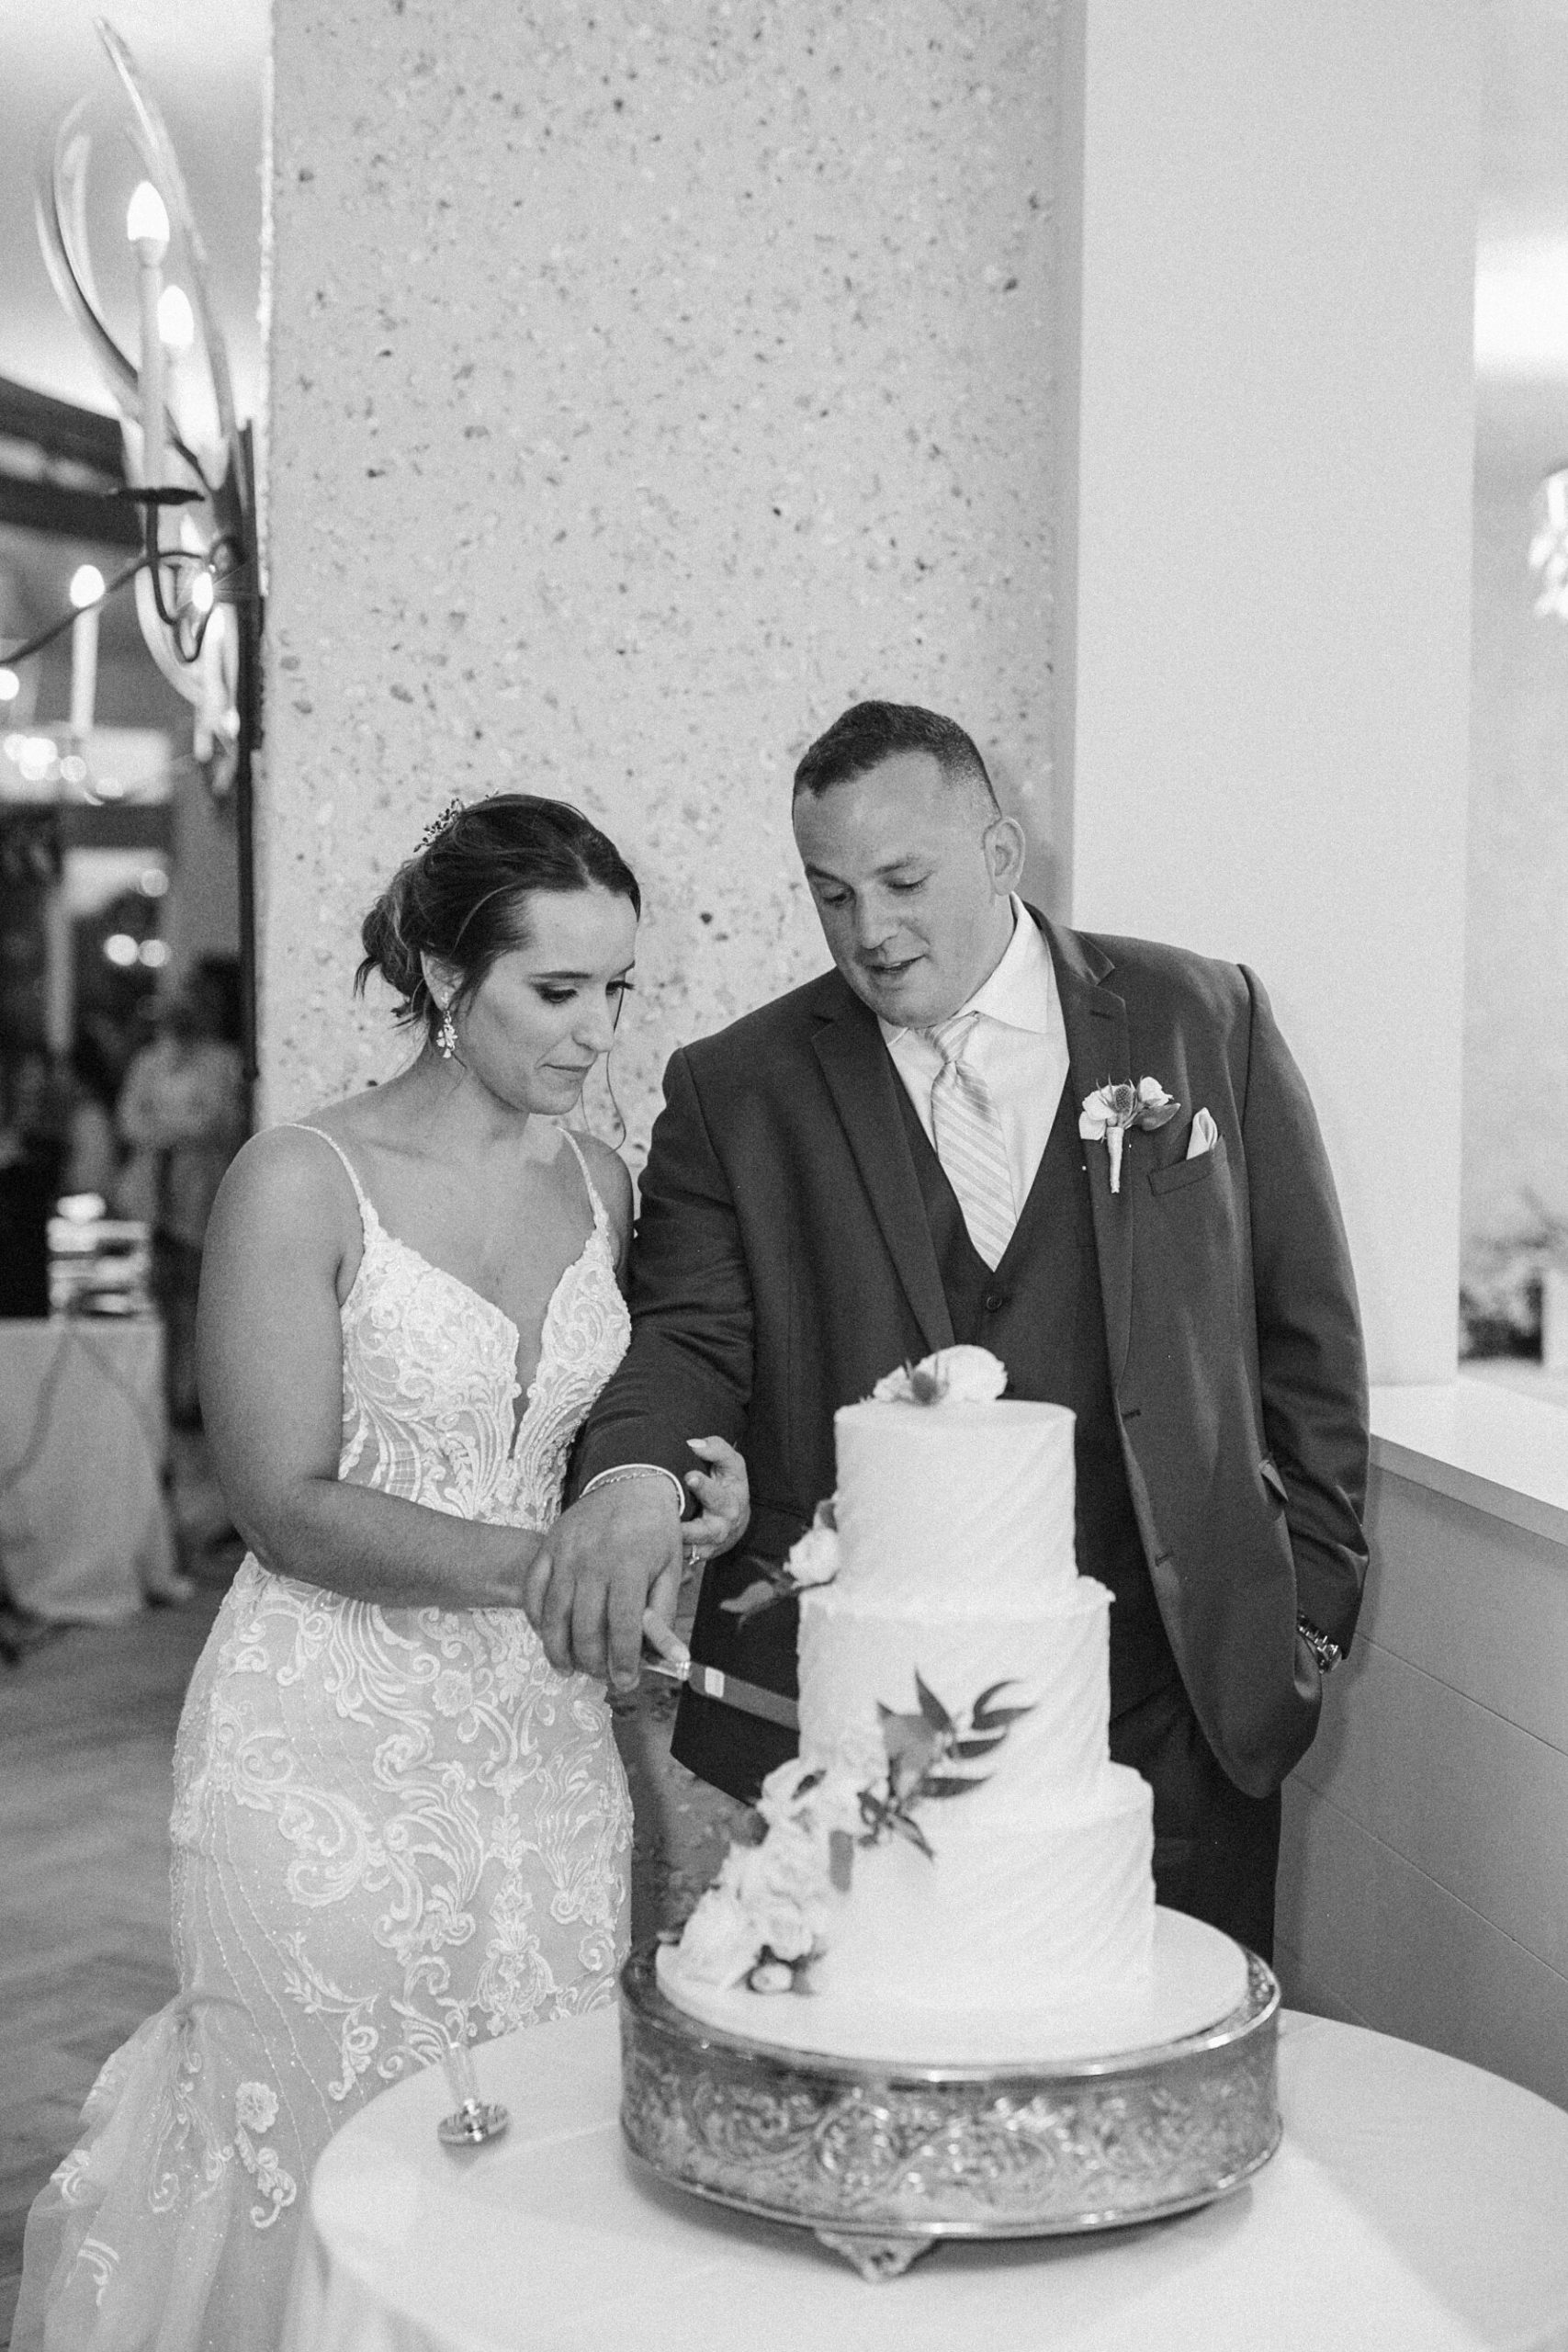 Cake cutting at Westin Hilton Head wedding in South Carolina.